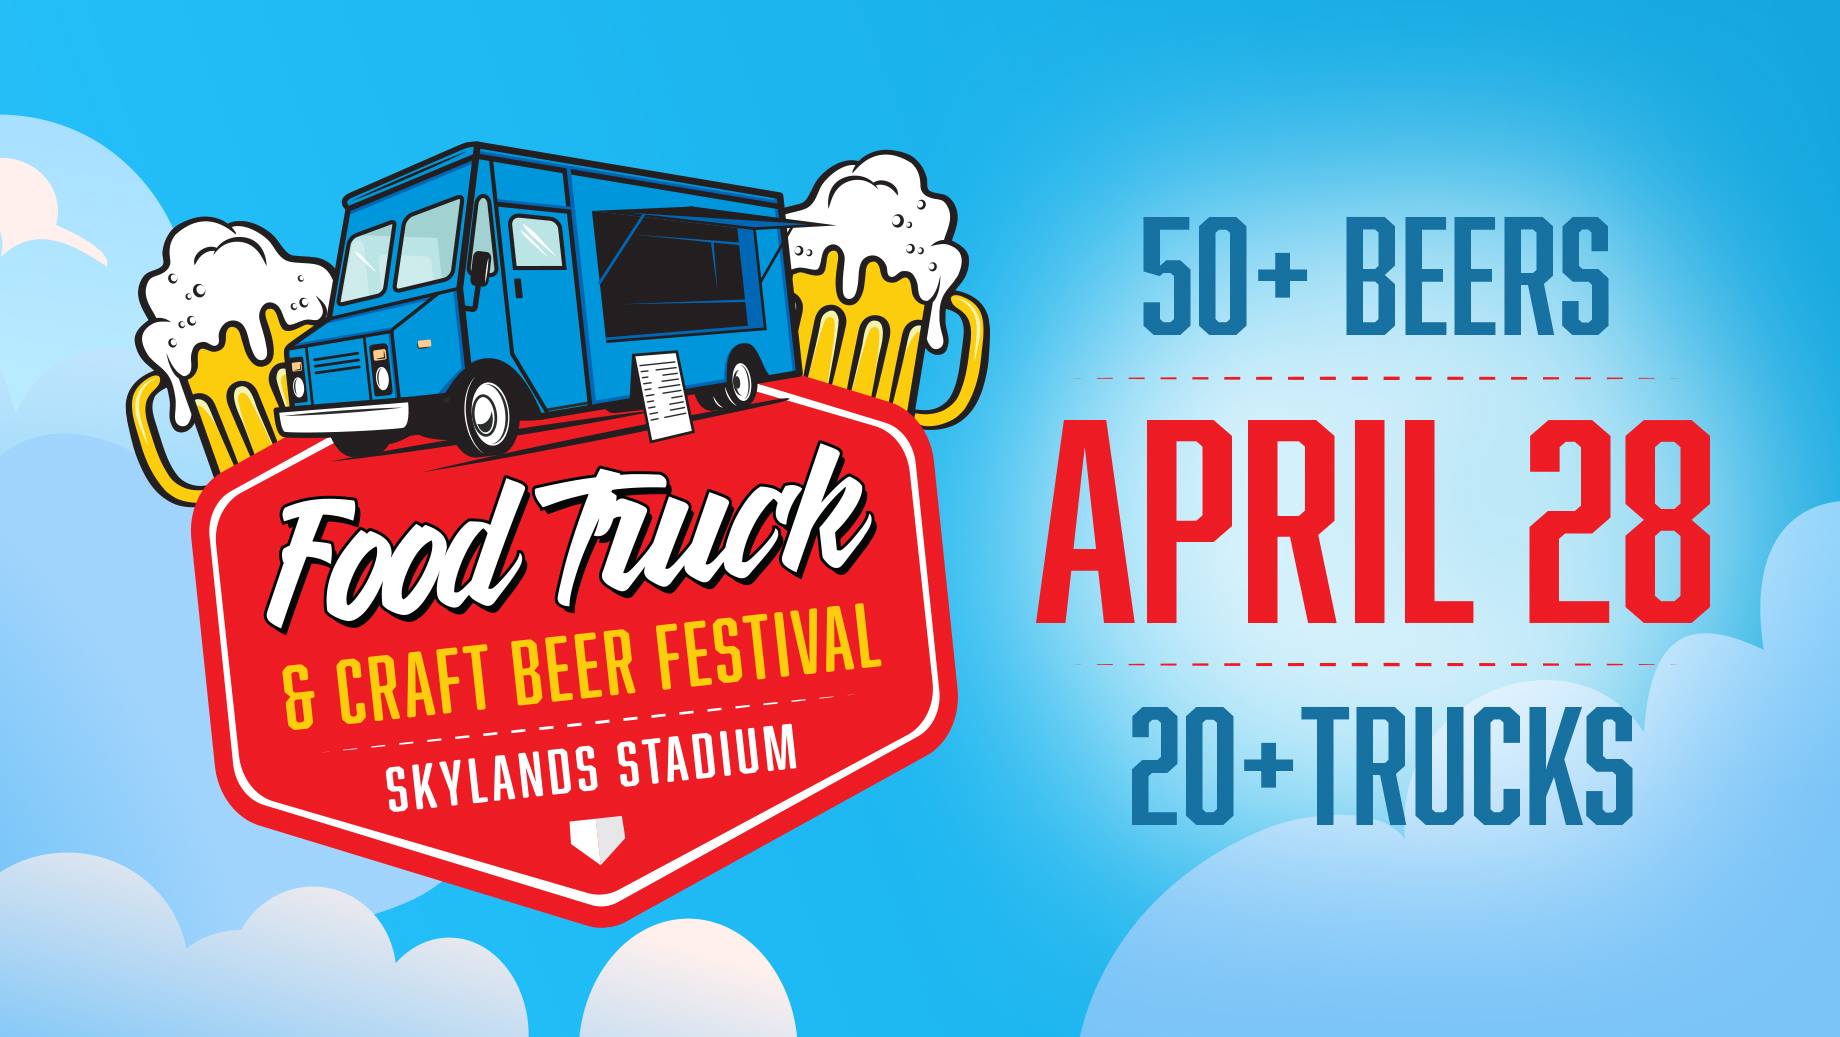 Skylands Stadium Food Truck & Craft Beer Festival